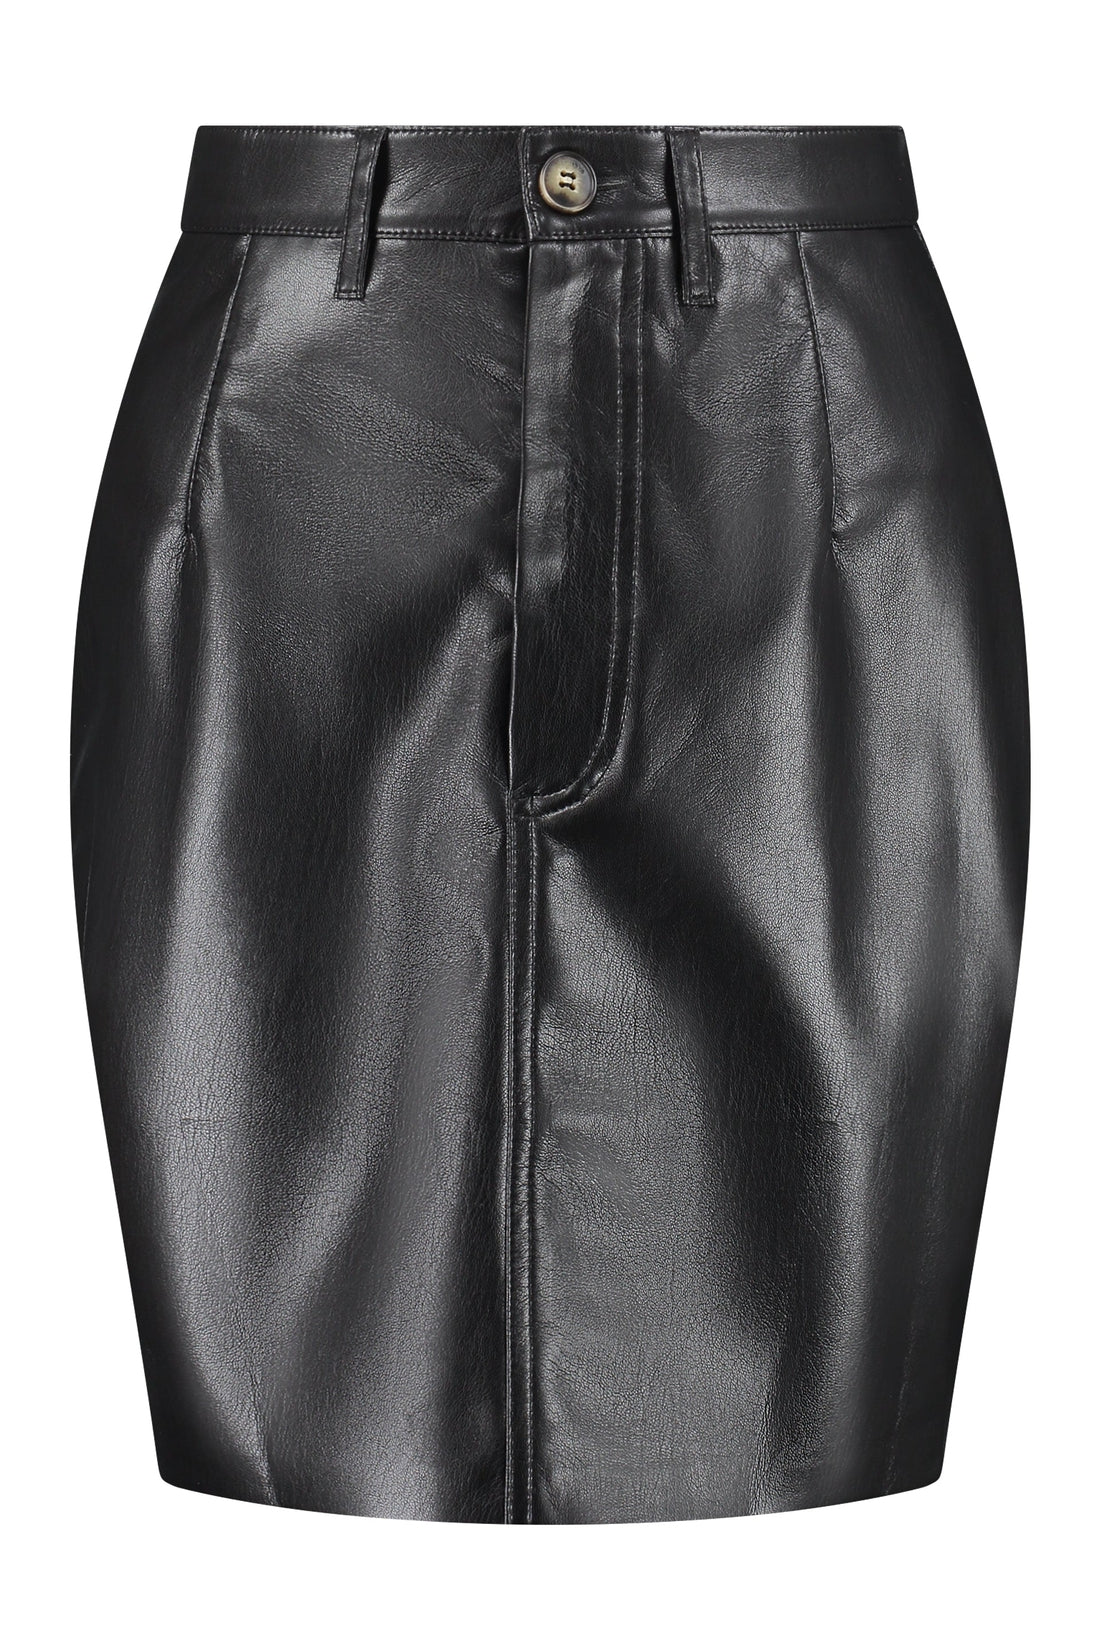 Nanushka-OUTLET-SALE-Venne faux leather skirt-ARCHIVIST